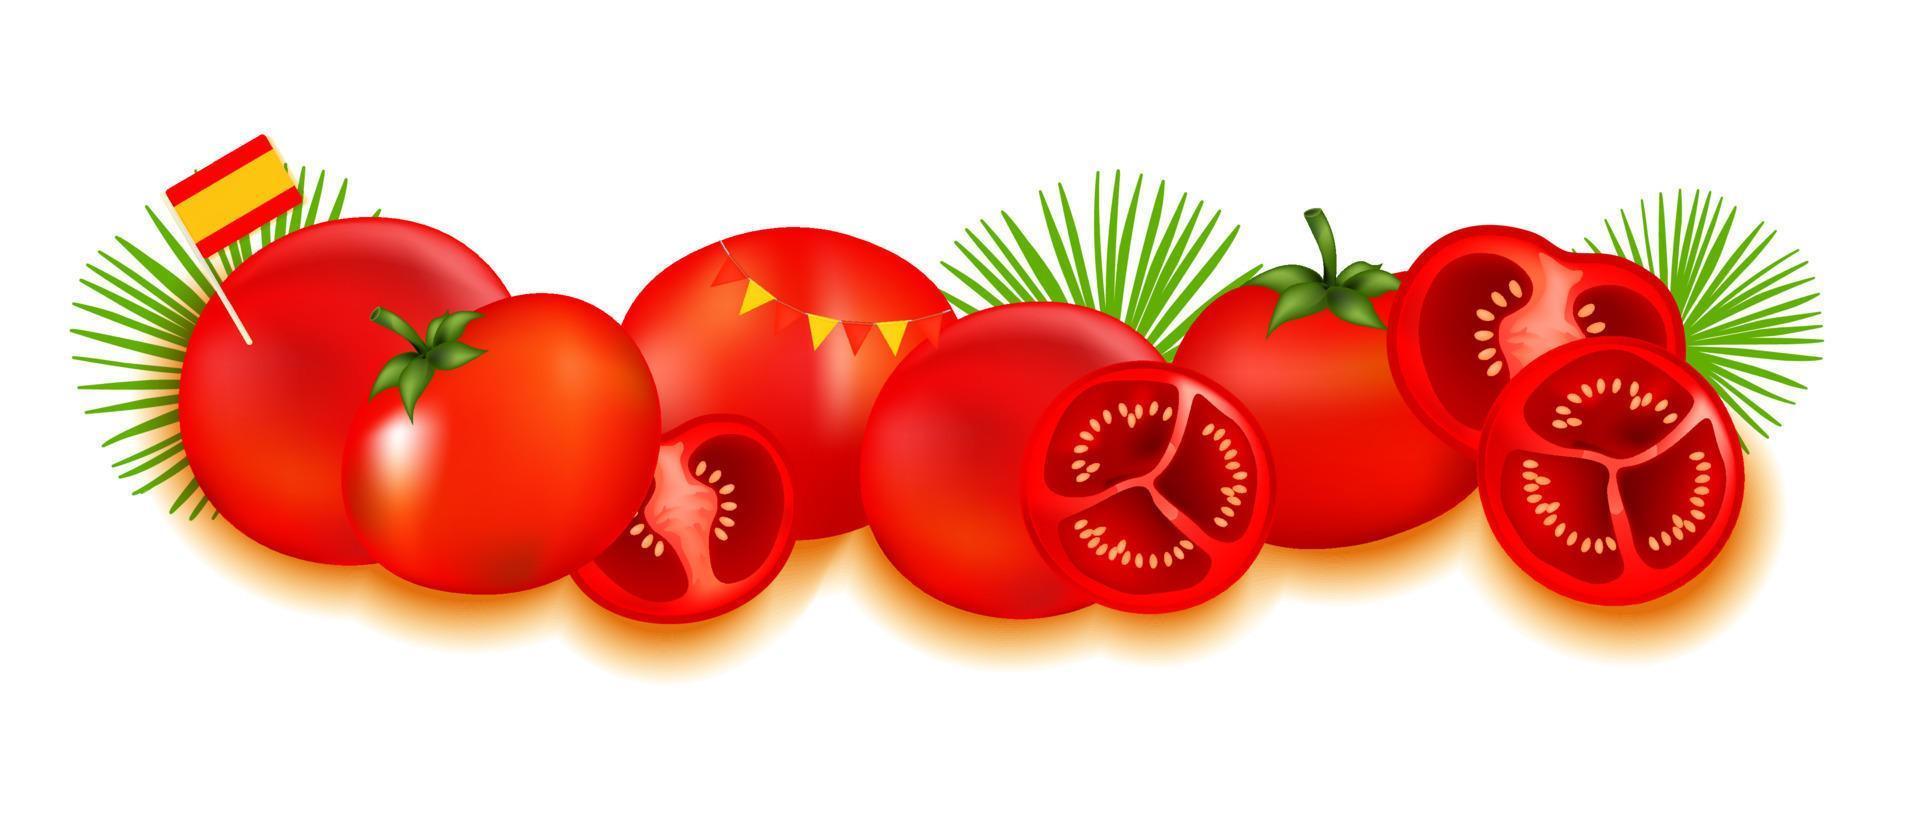 la tomatina Festival Banner. la tomatina im Spanien. Tomate Streit. Tomate Schlacht vektor